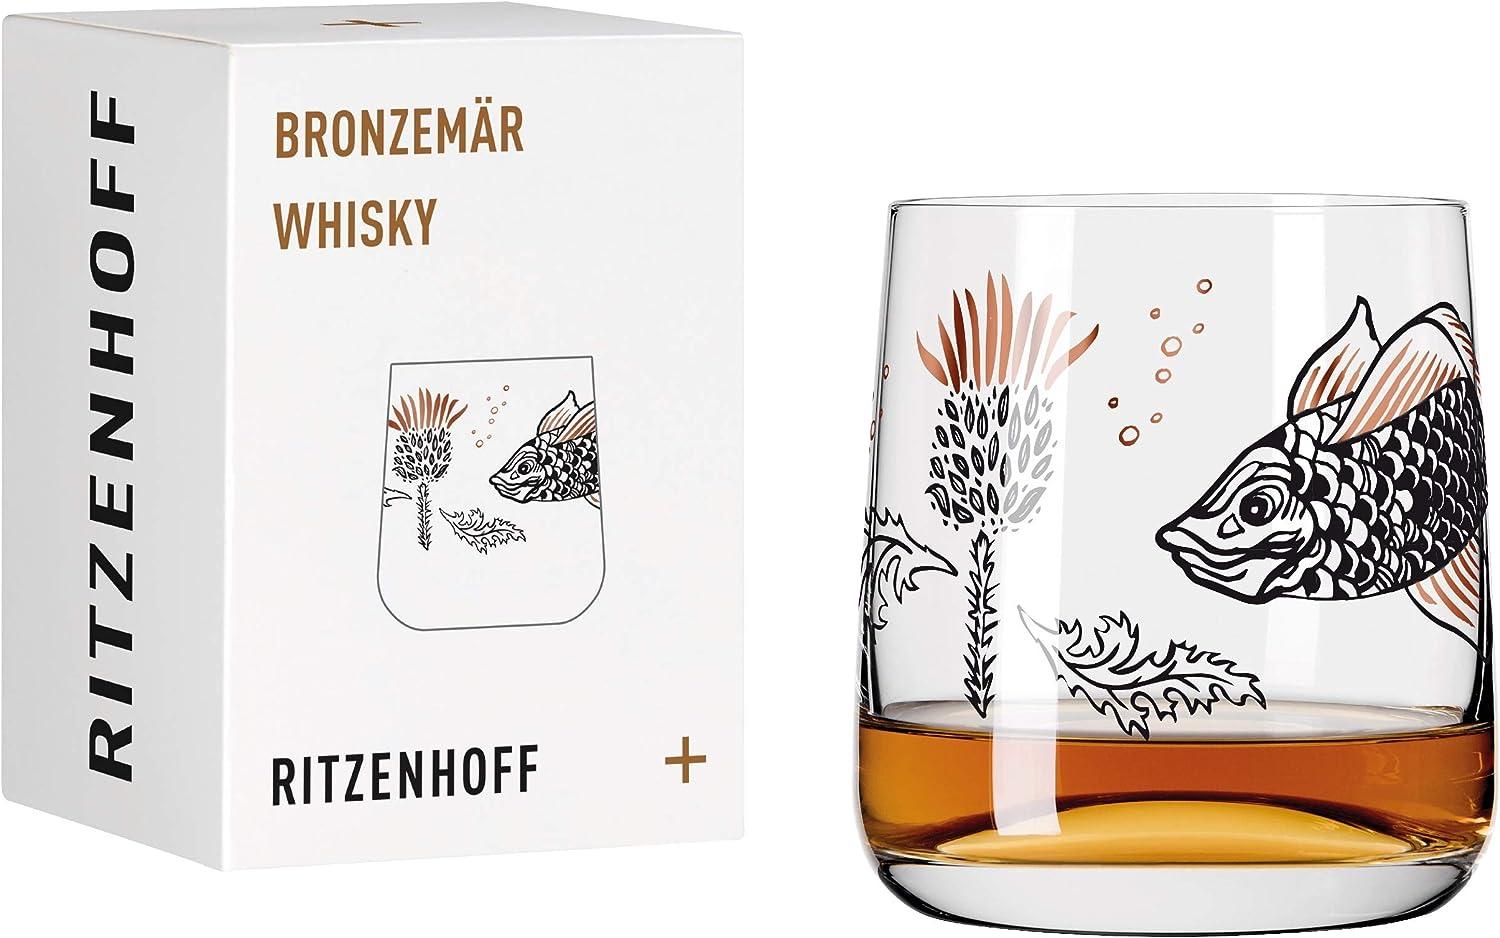 Ritzenhoff Bronzemär Whisky 004 Hajek 2020 / Whiskyglas Bild 1